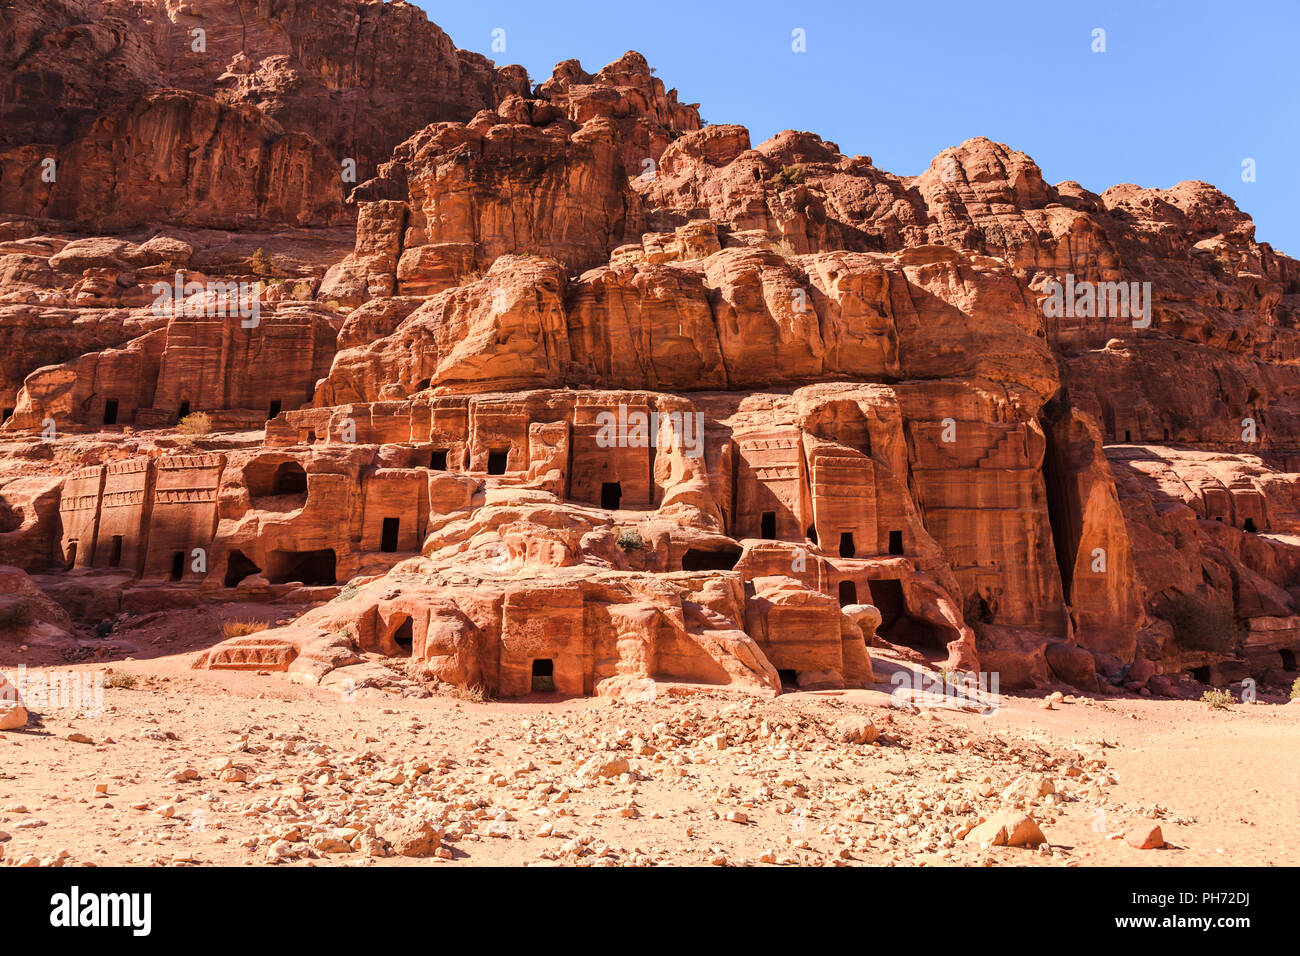 Acantilado tumbas en Petra. Foto de stock